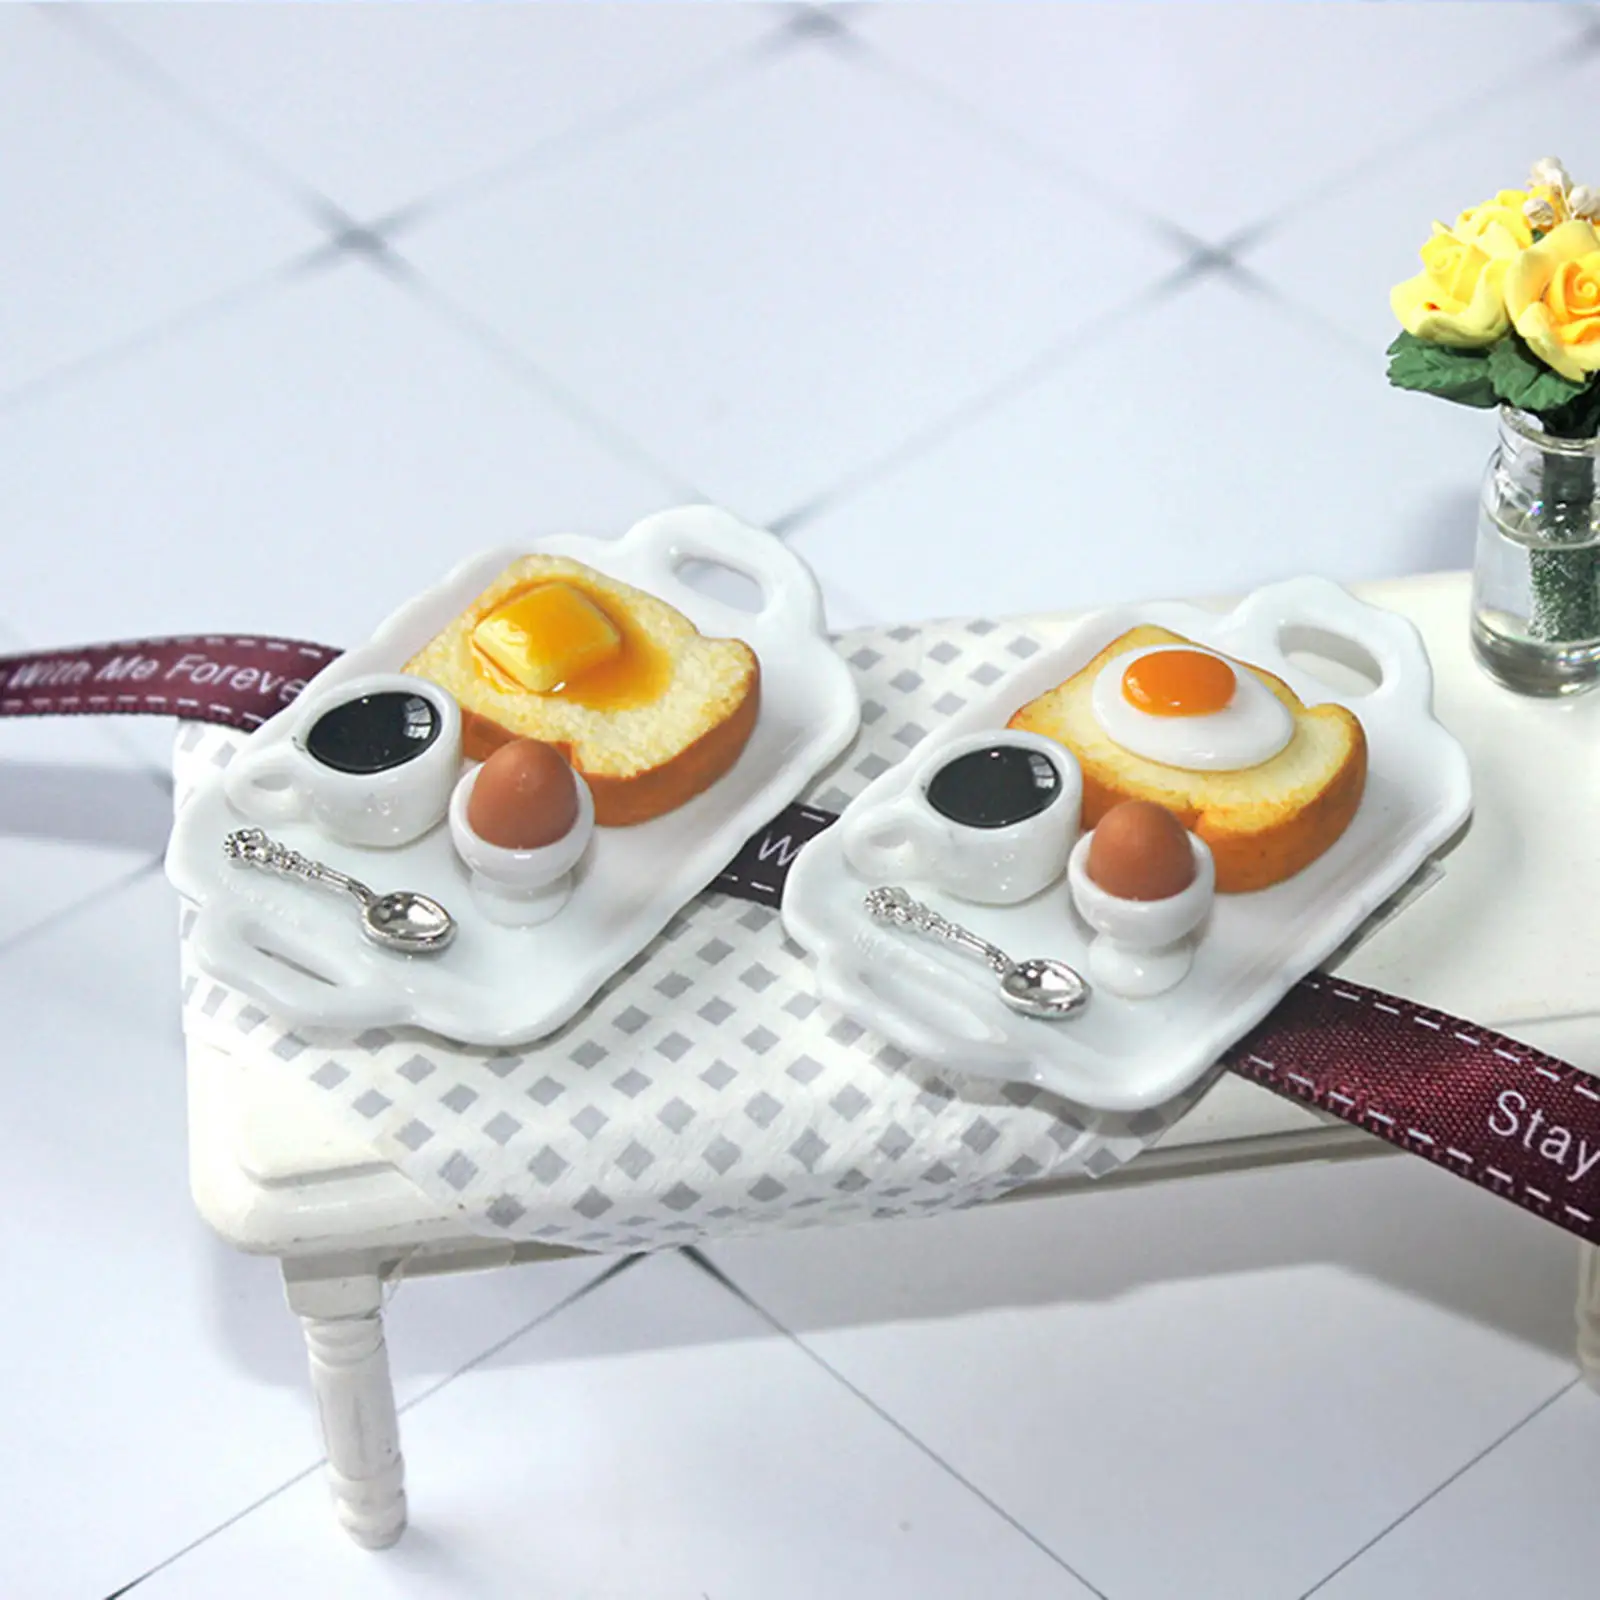 1/12 Dollhouse Breakfast Tray Kitchen Food Ornament Birthday Gifts Doll House Decration Ceramic for Girls Children Kids